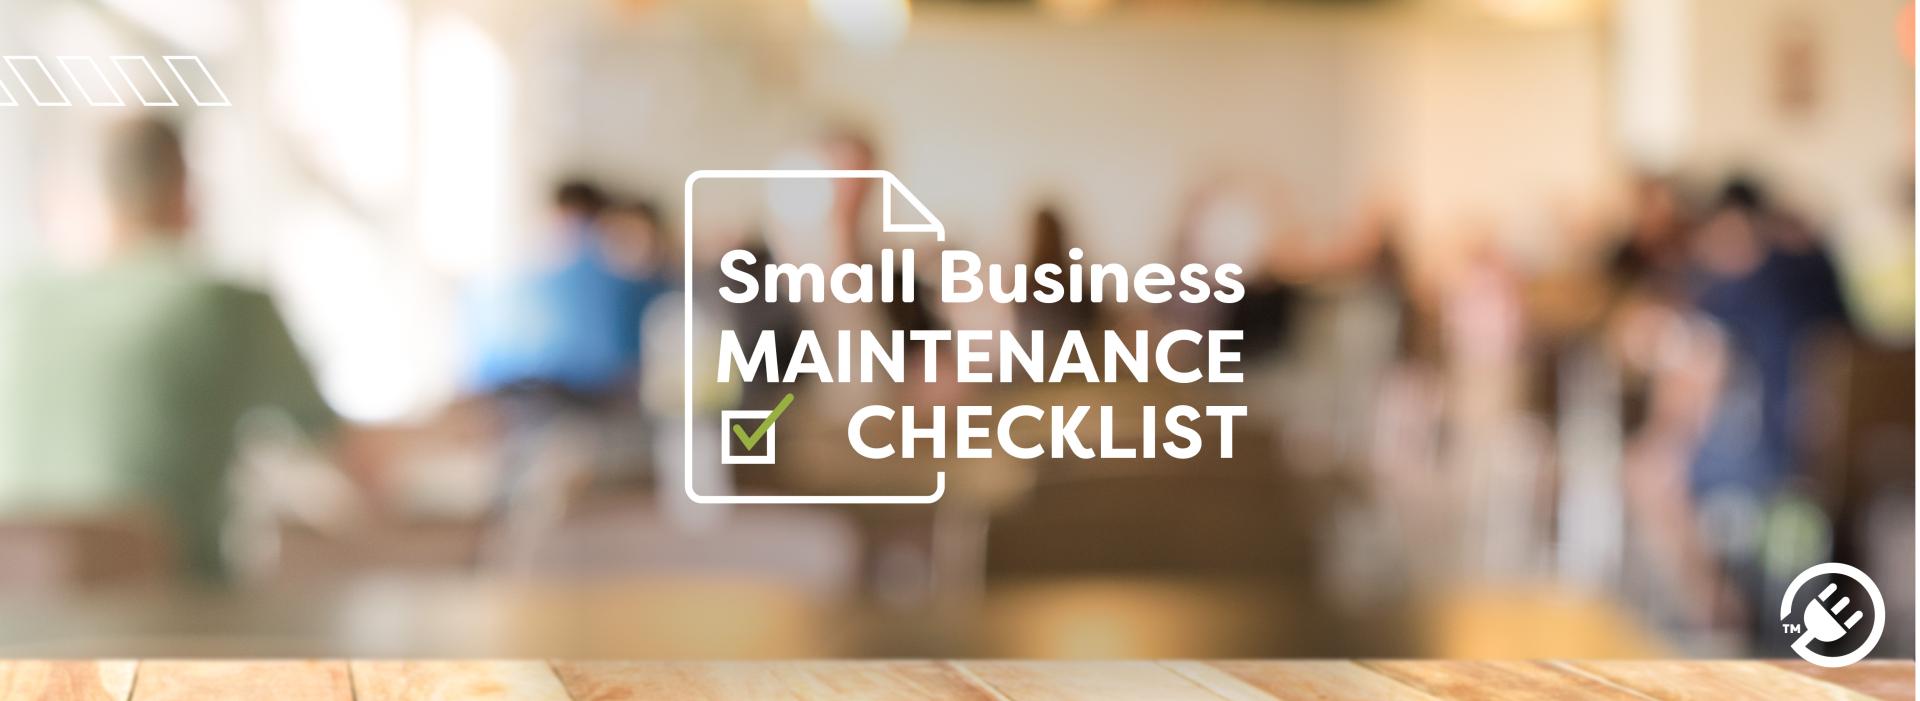 Energy Saving Maintenance Checklist for Small Businesses